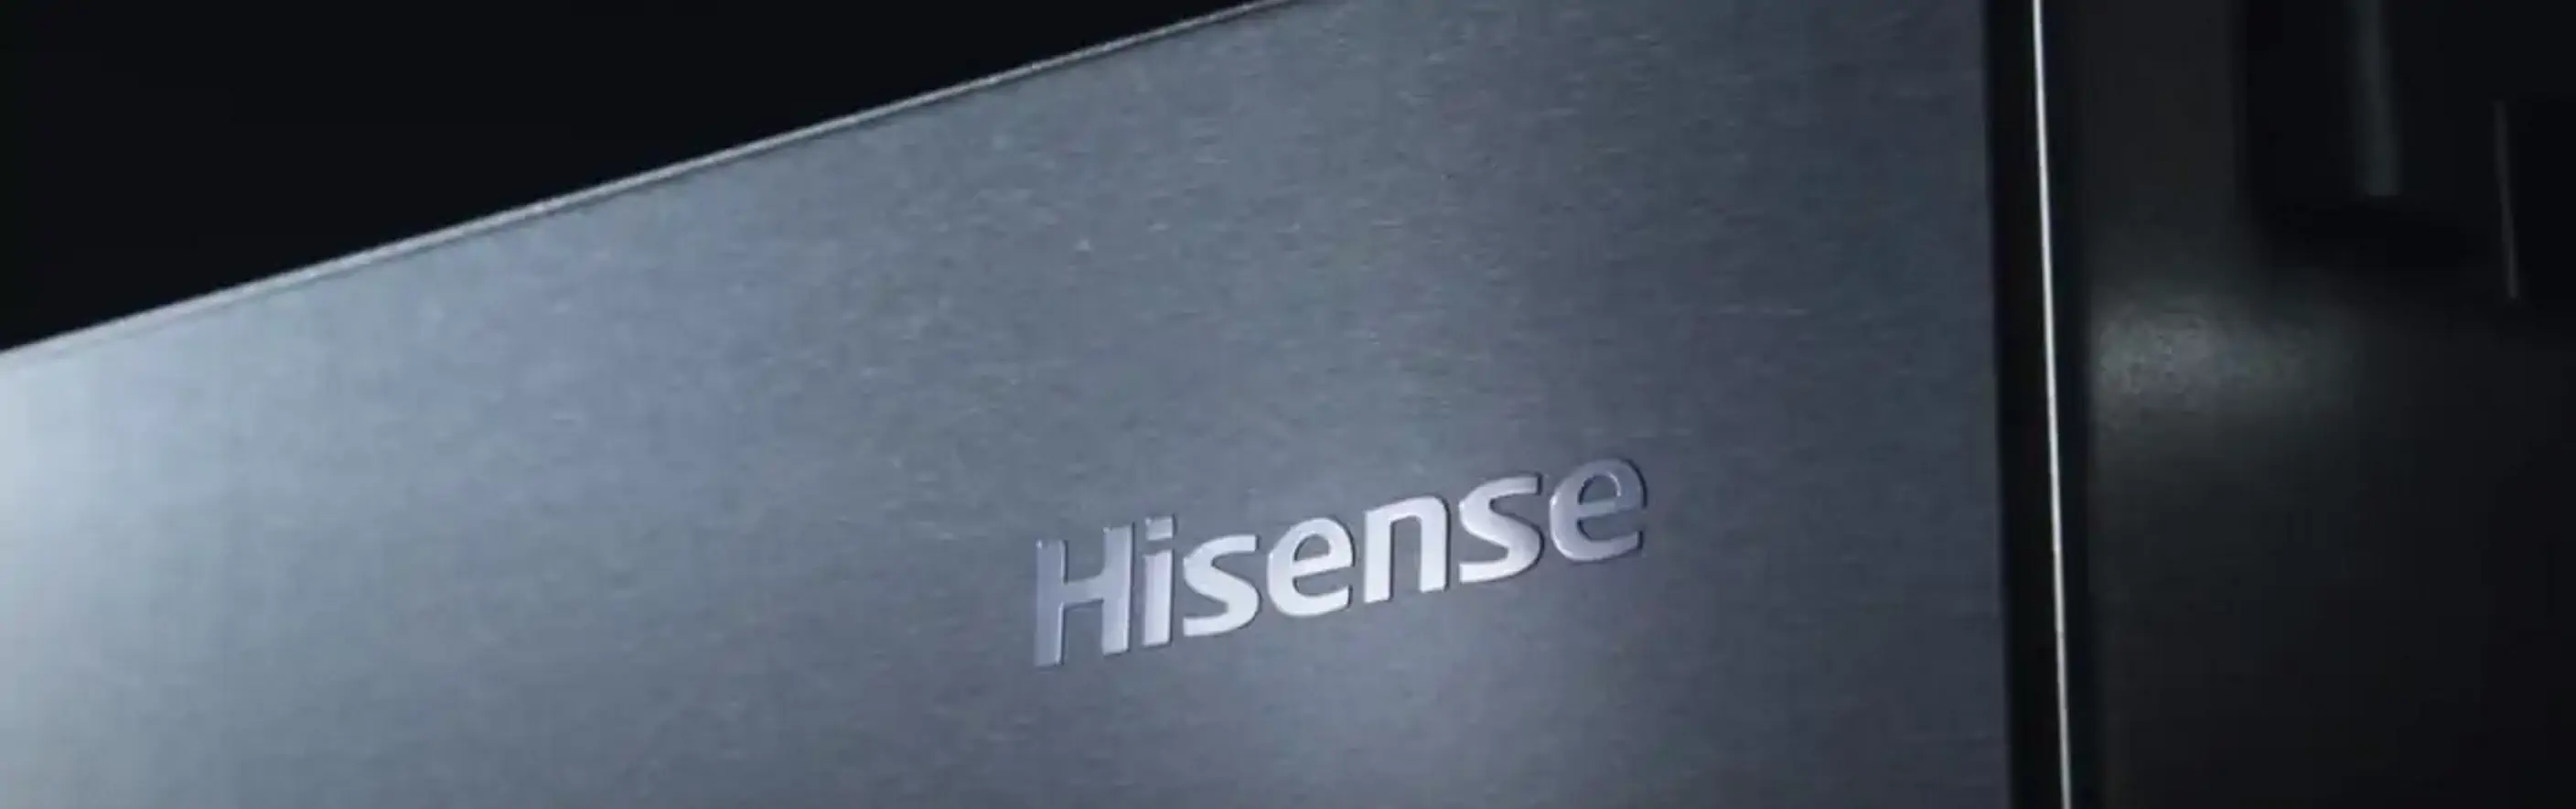 hisense-video-2816x880.webp